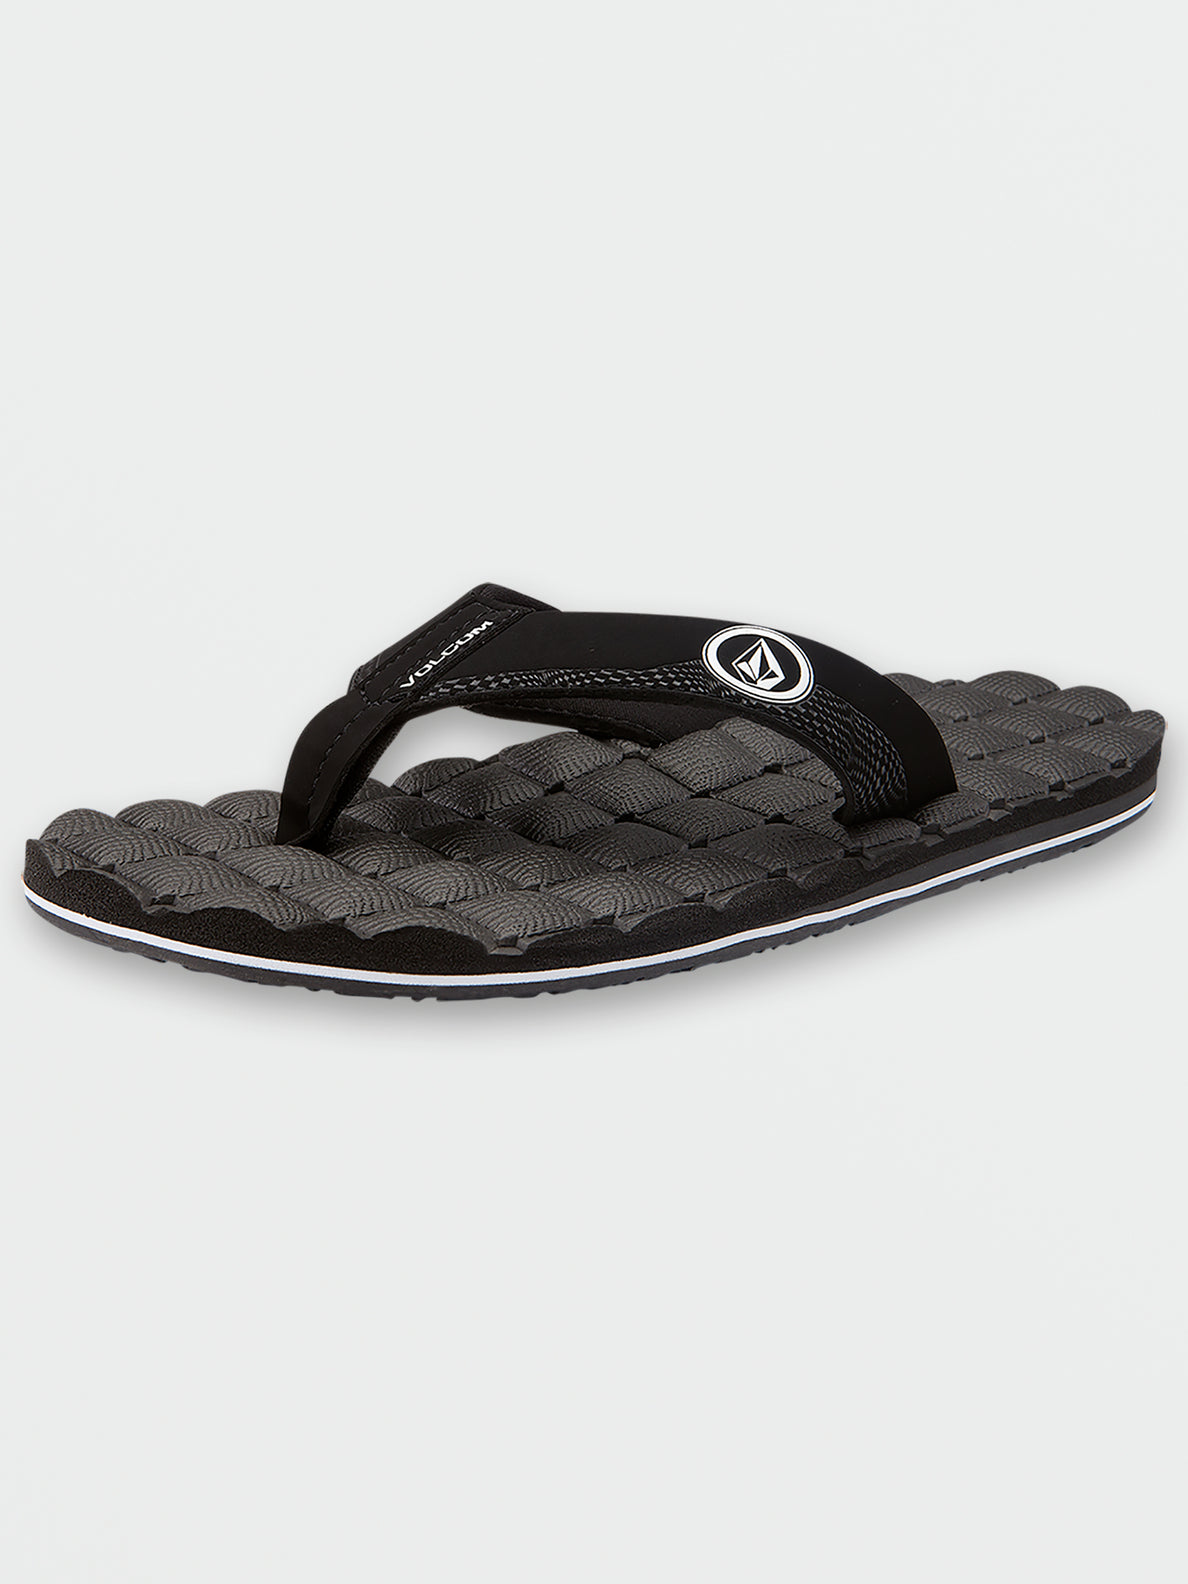 Recliner Sandals - Black White